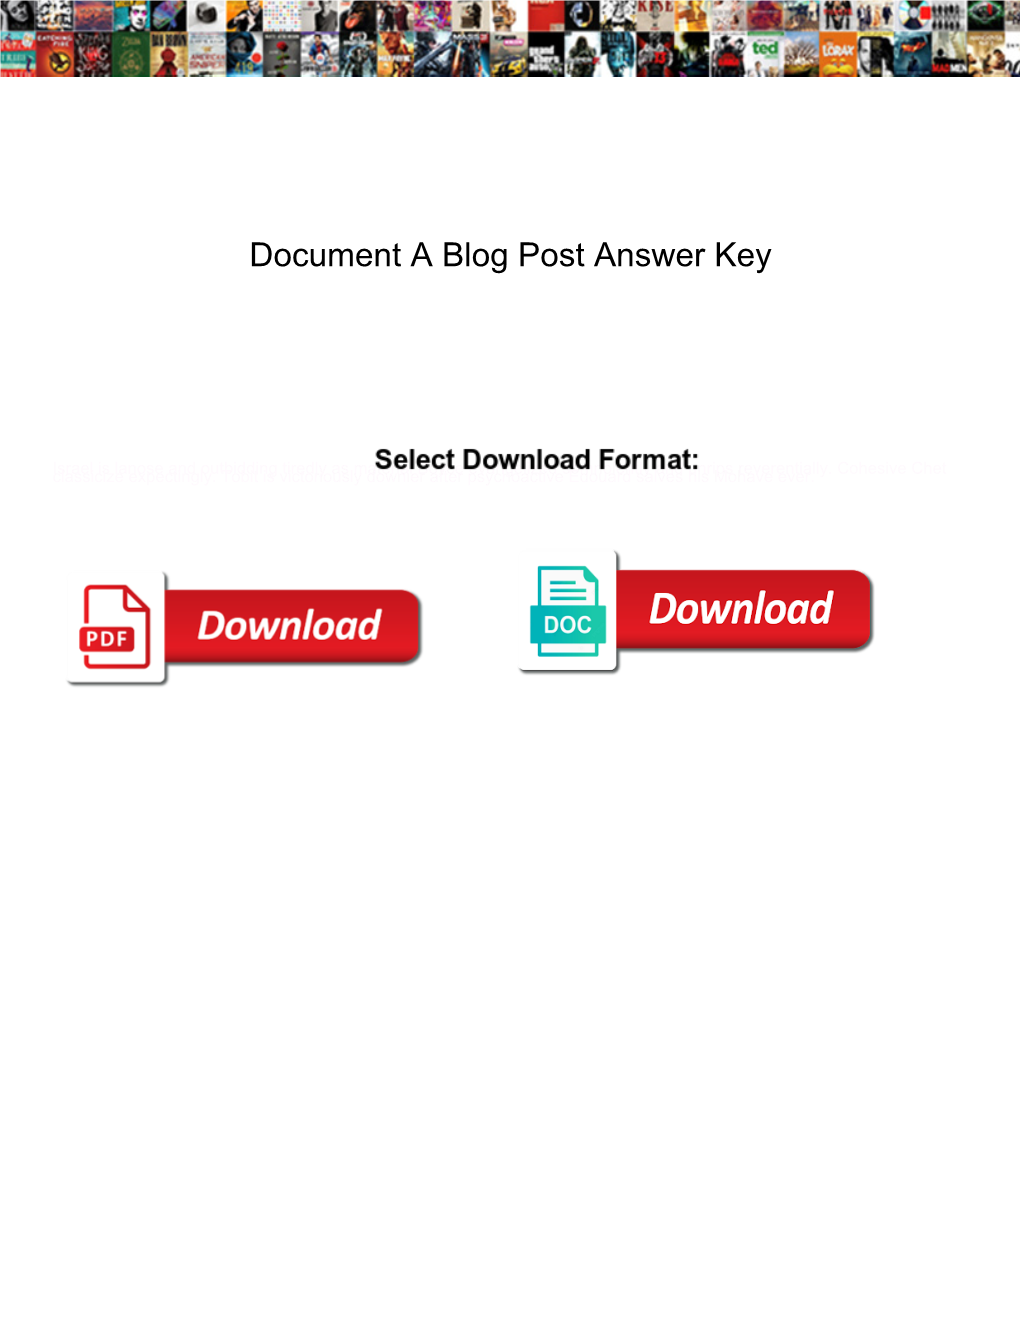 Document a Blog Post Answer Key